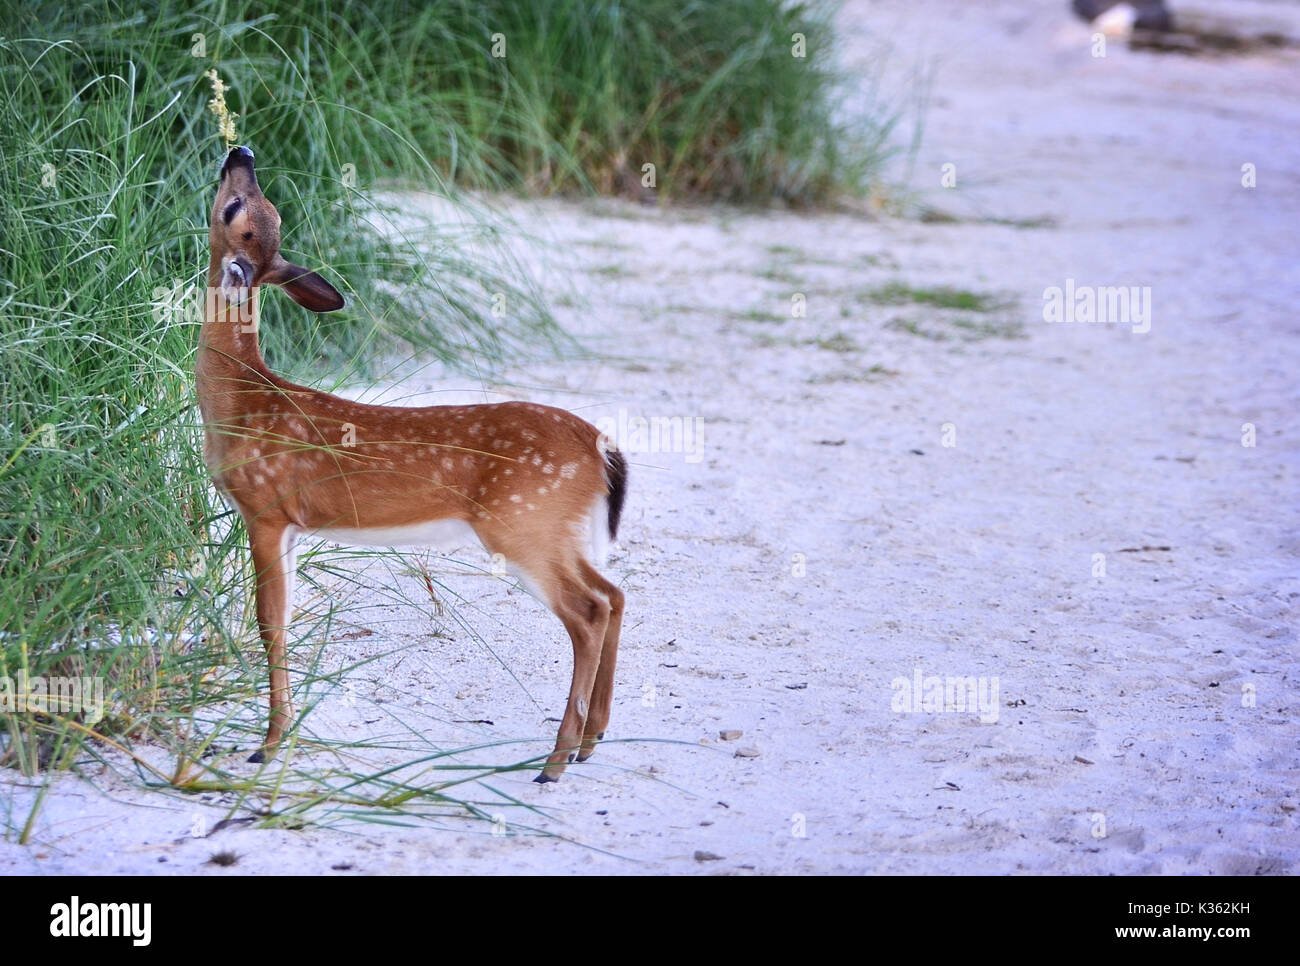 Snack time on the beach for a baby Key deer - ococoileus virginianus clavium Stock Photo